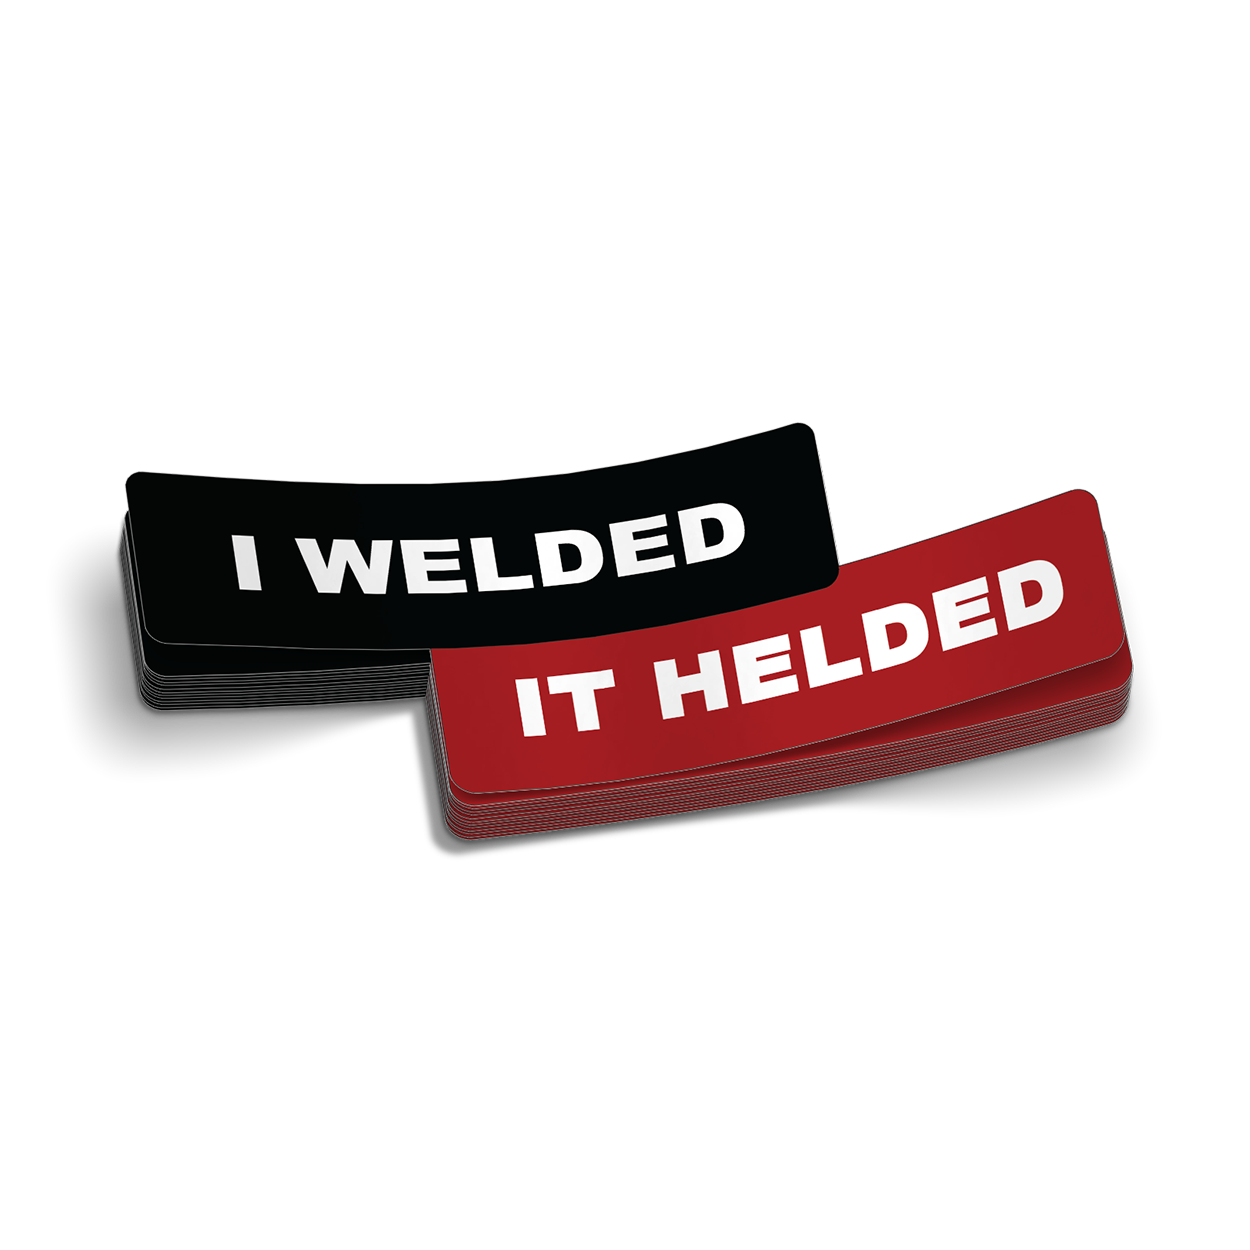 I Welded - Welding Helmet Sticker